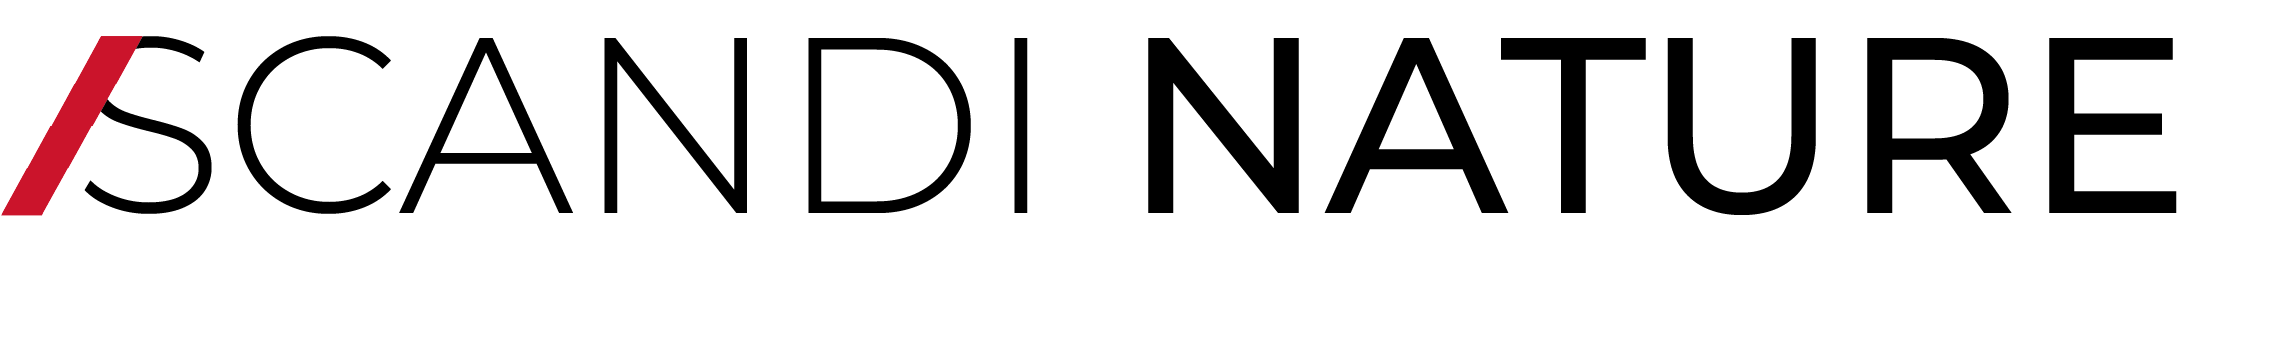 Logo de la tendance Scandi nature